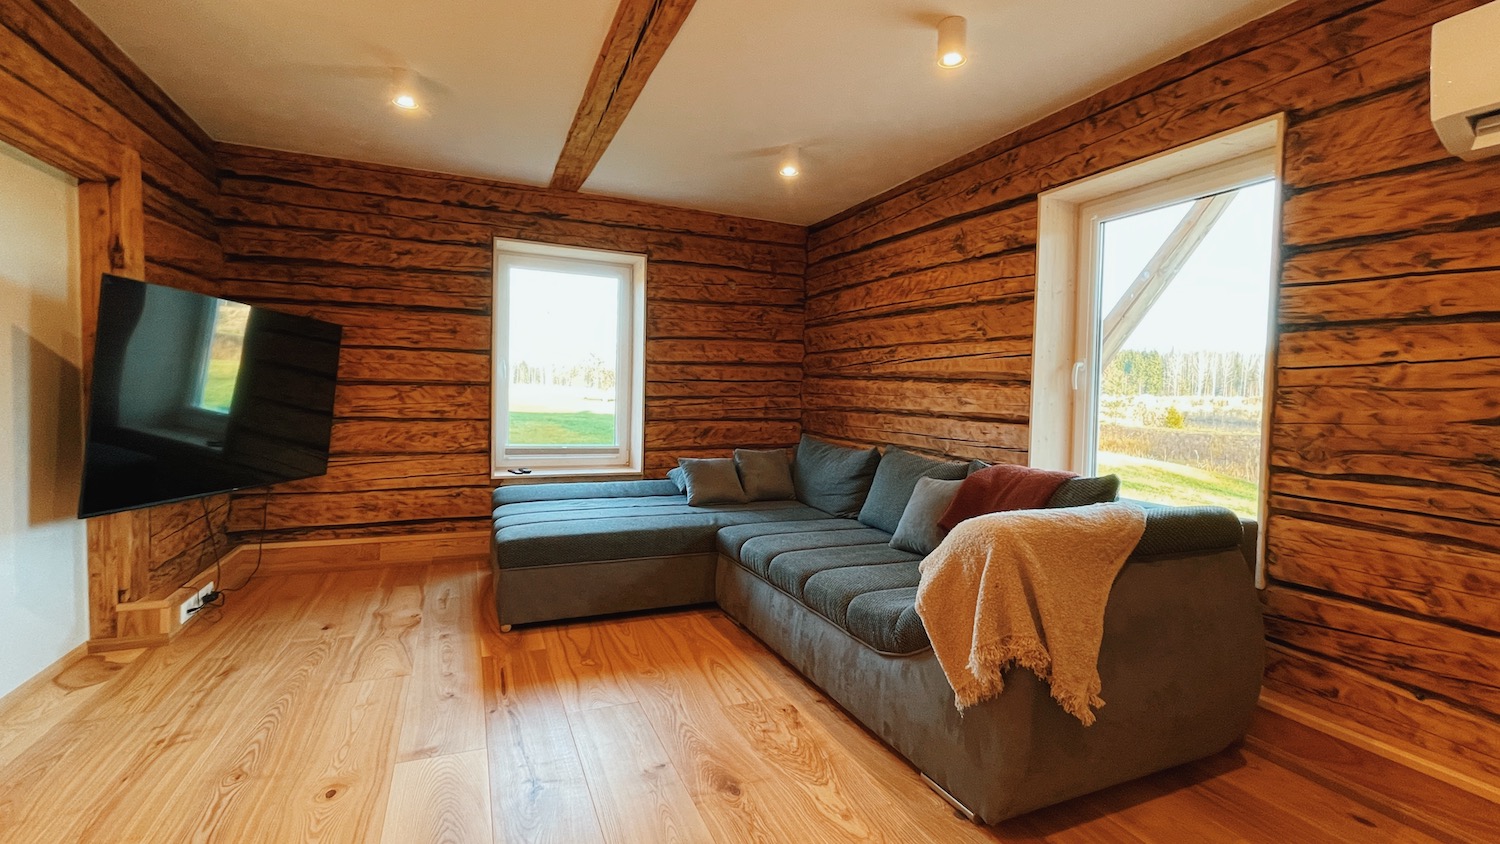 Best Estonian holiday homes in Estonia with a sauna, Pihlaka hunting cabin, Eesti Paigad